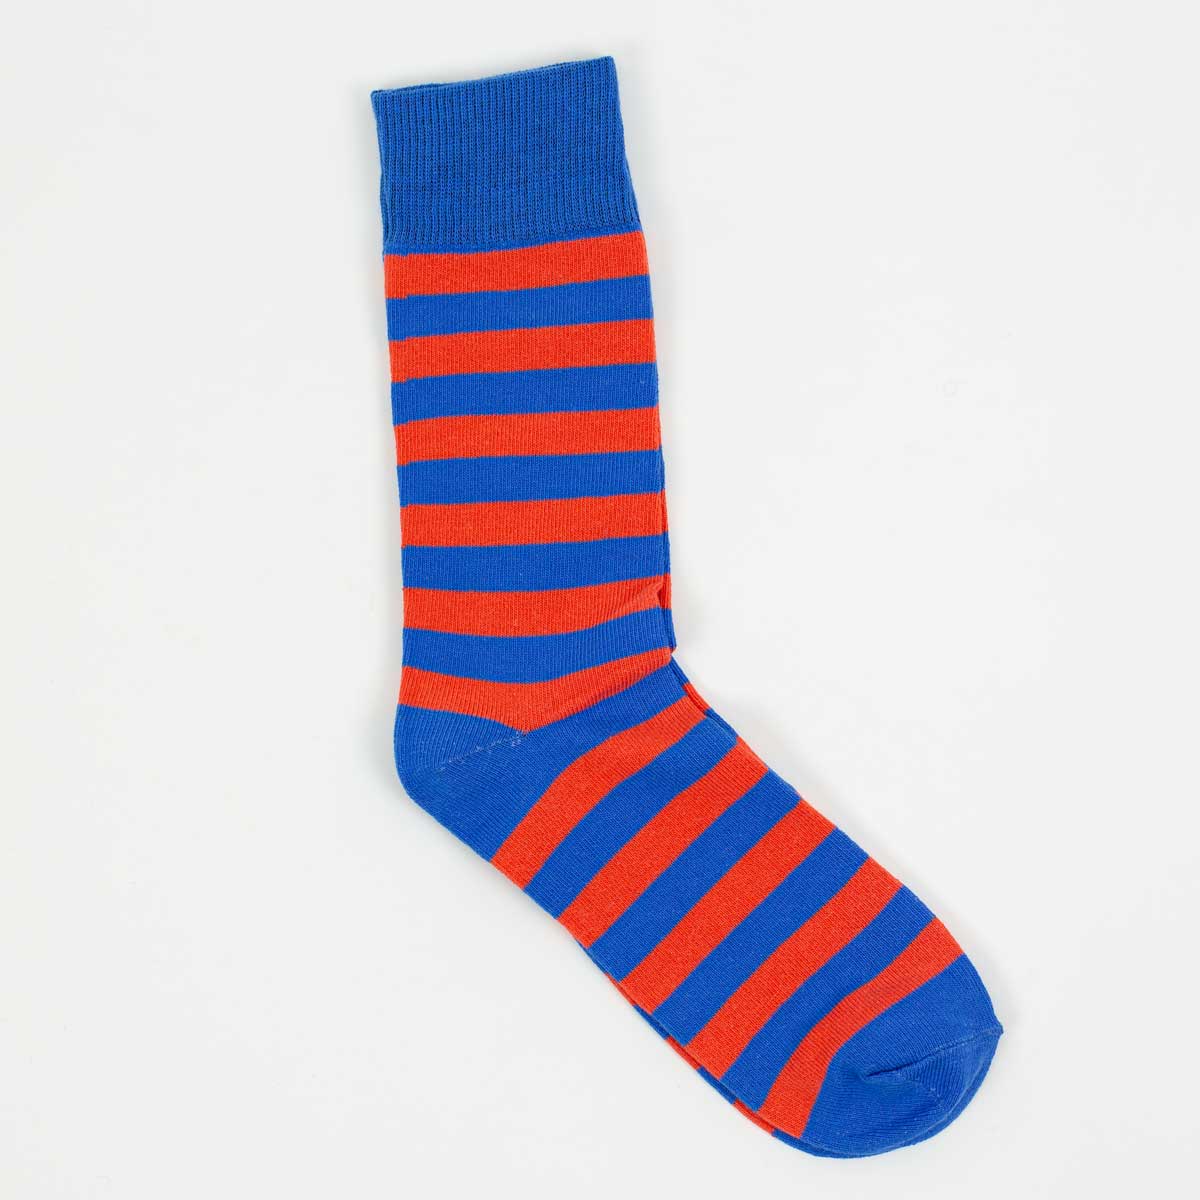 AWOC Socks, red/blue